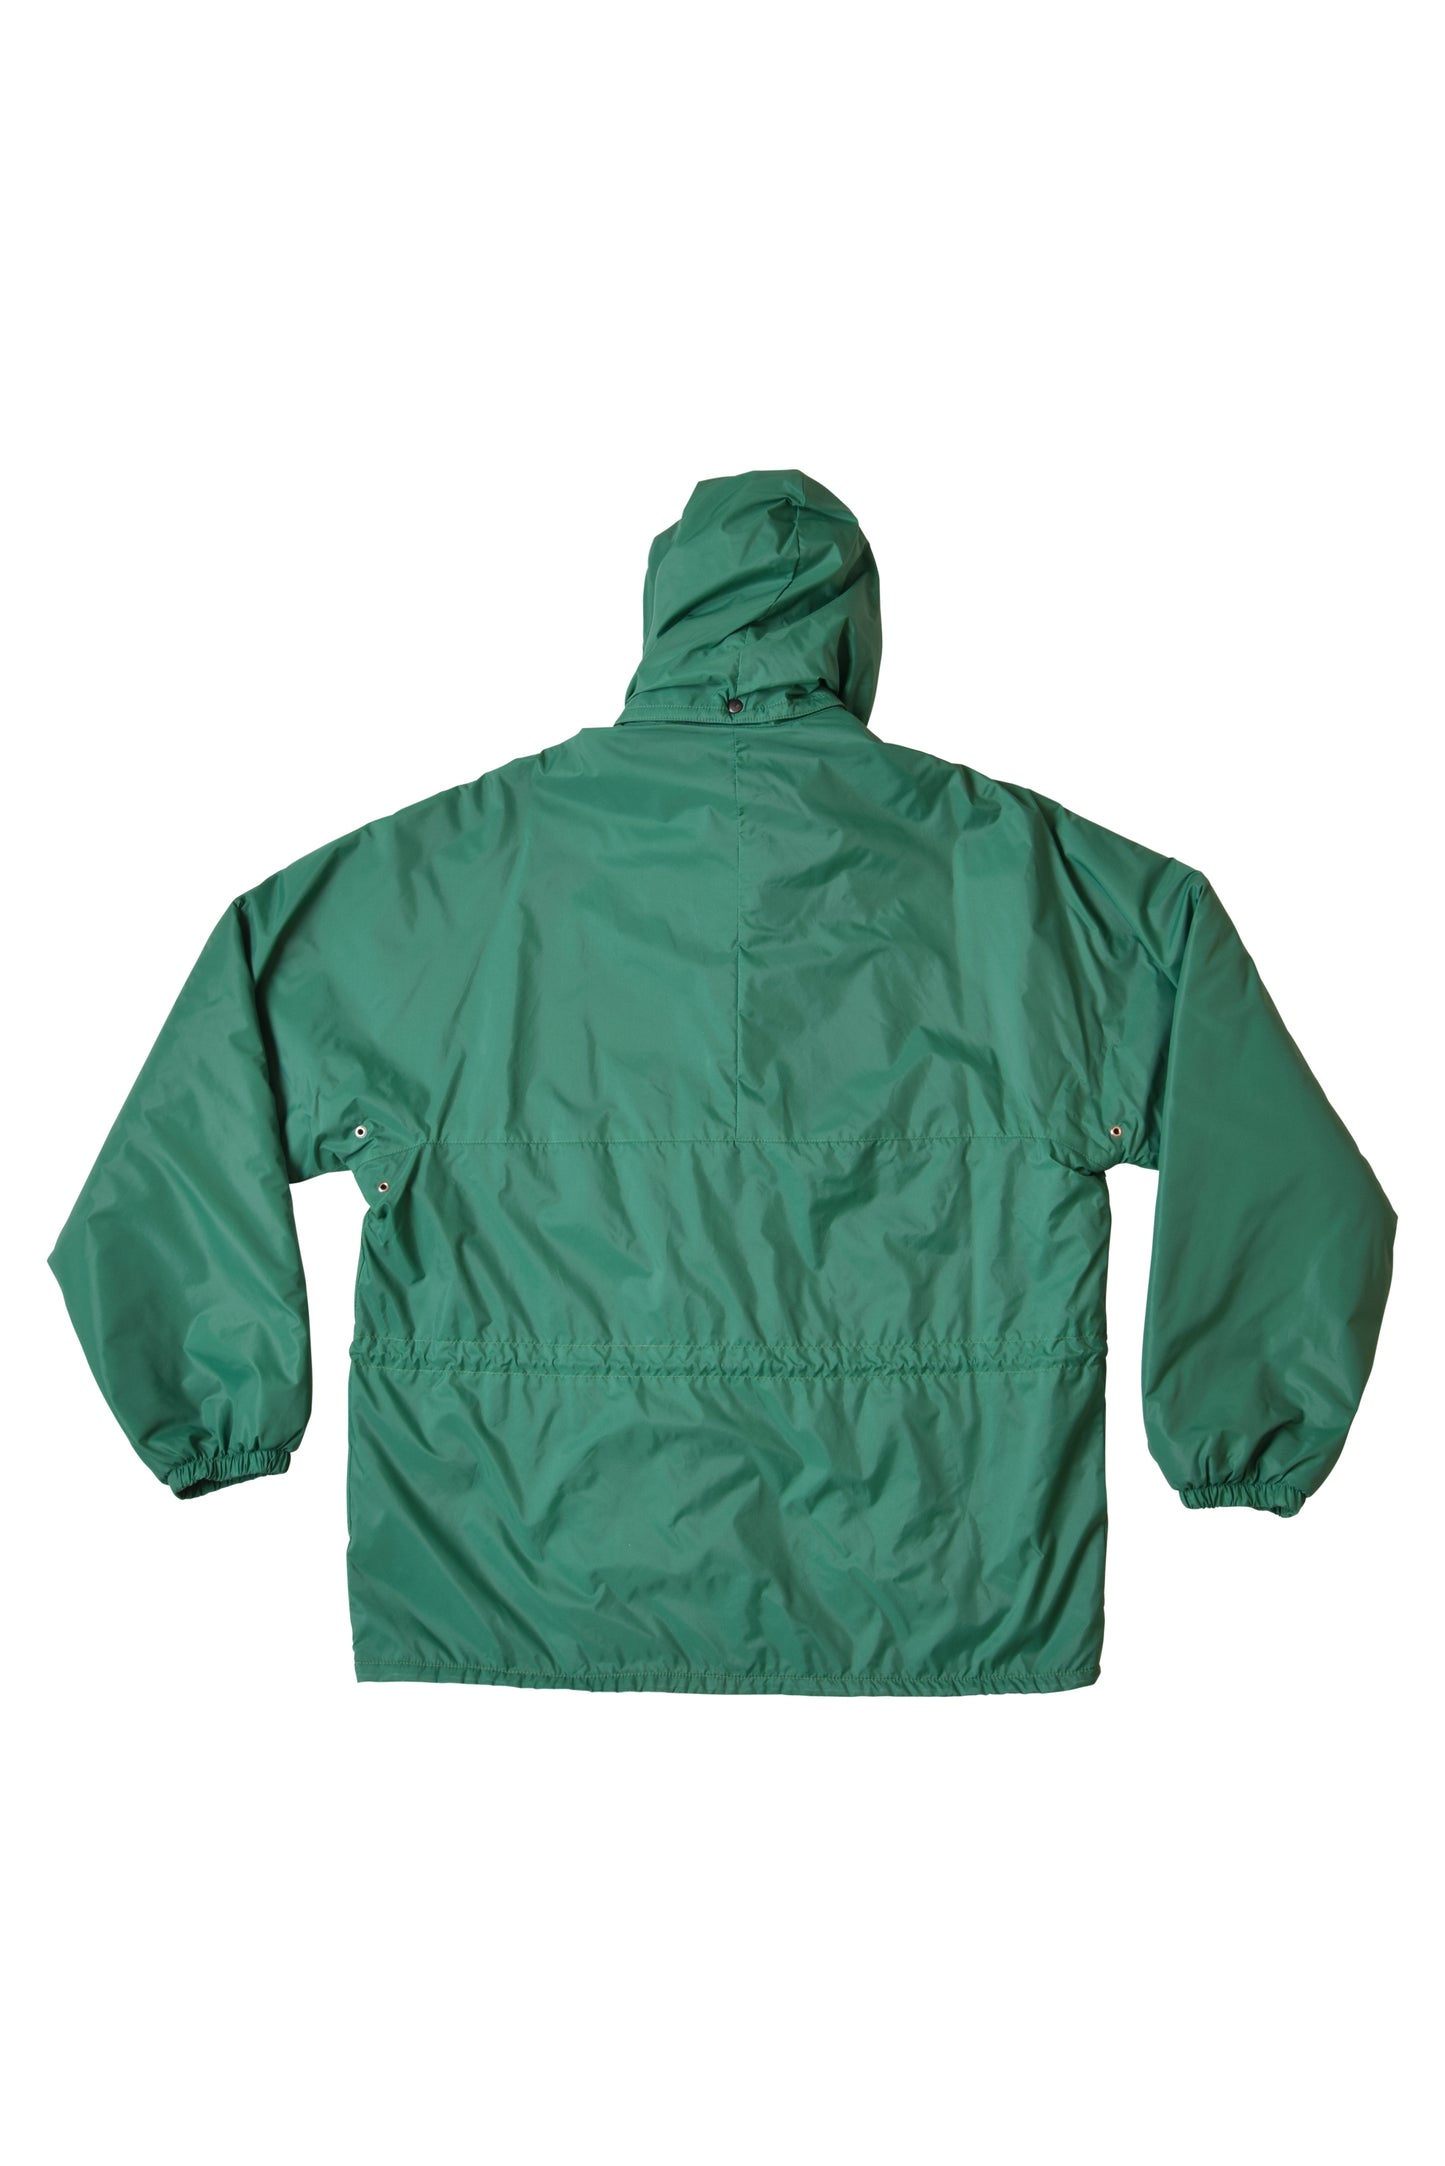 Vintage K-WAY Thick Jacket - Windbreaker Green Size XL